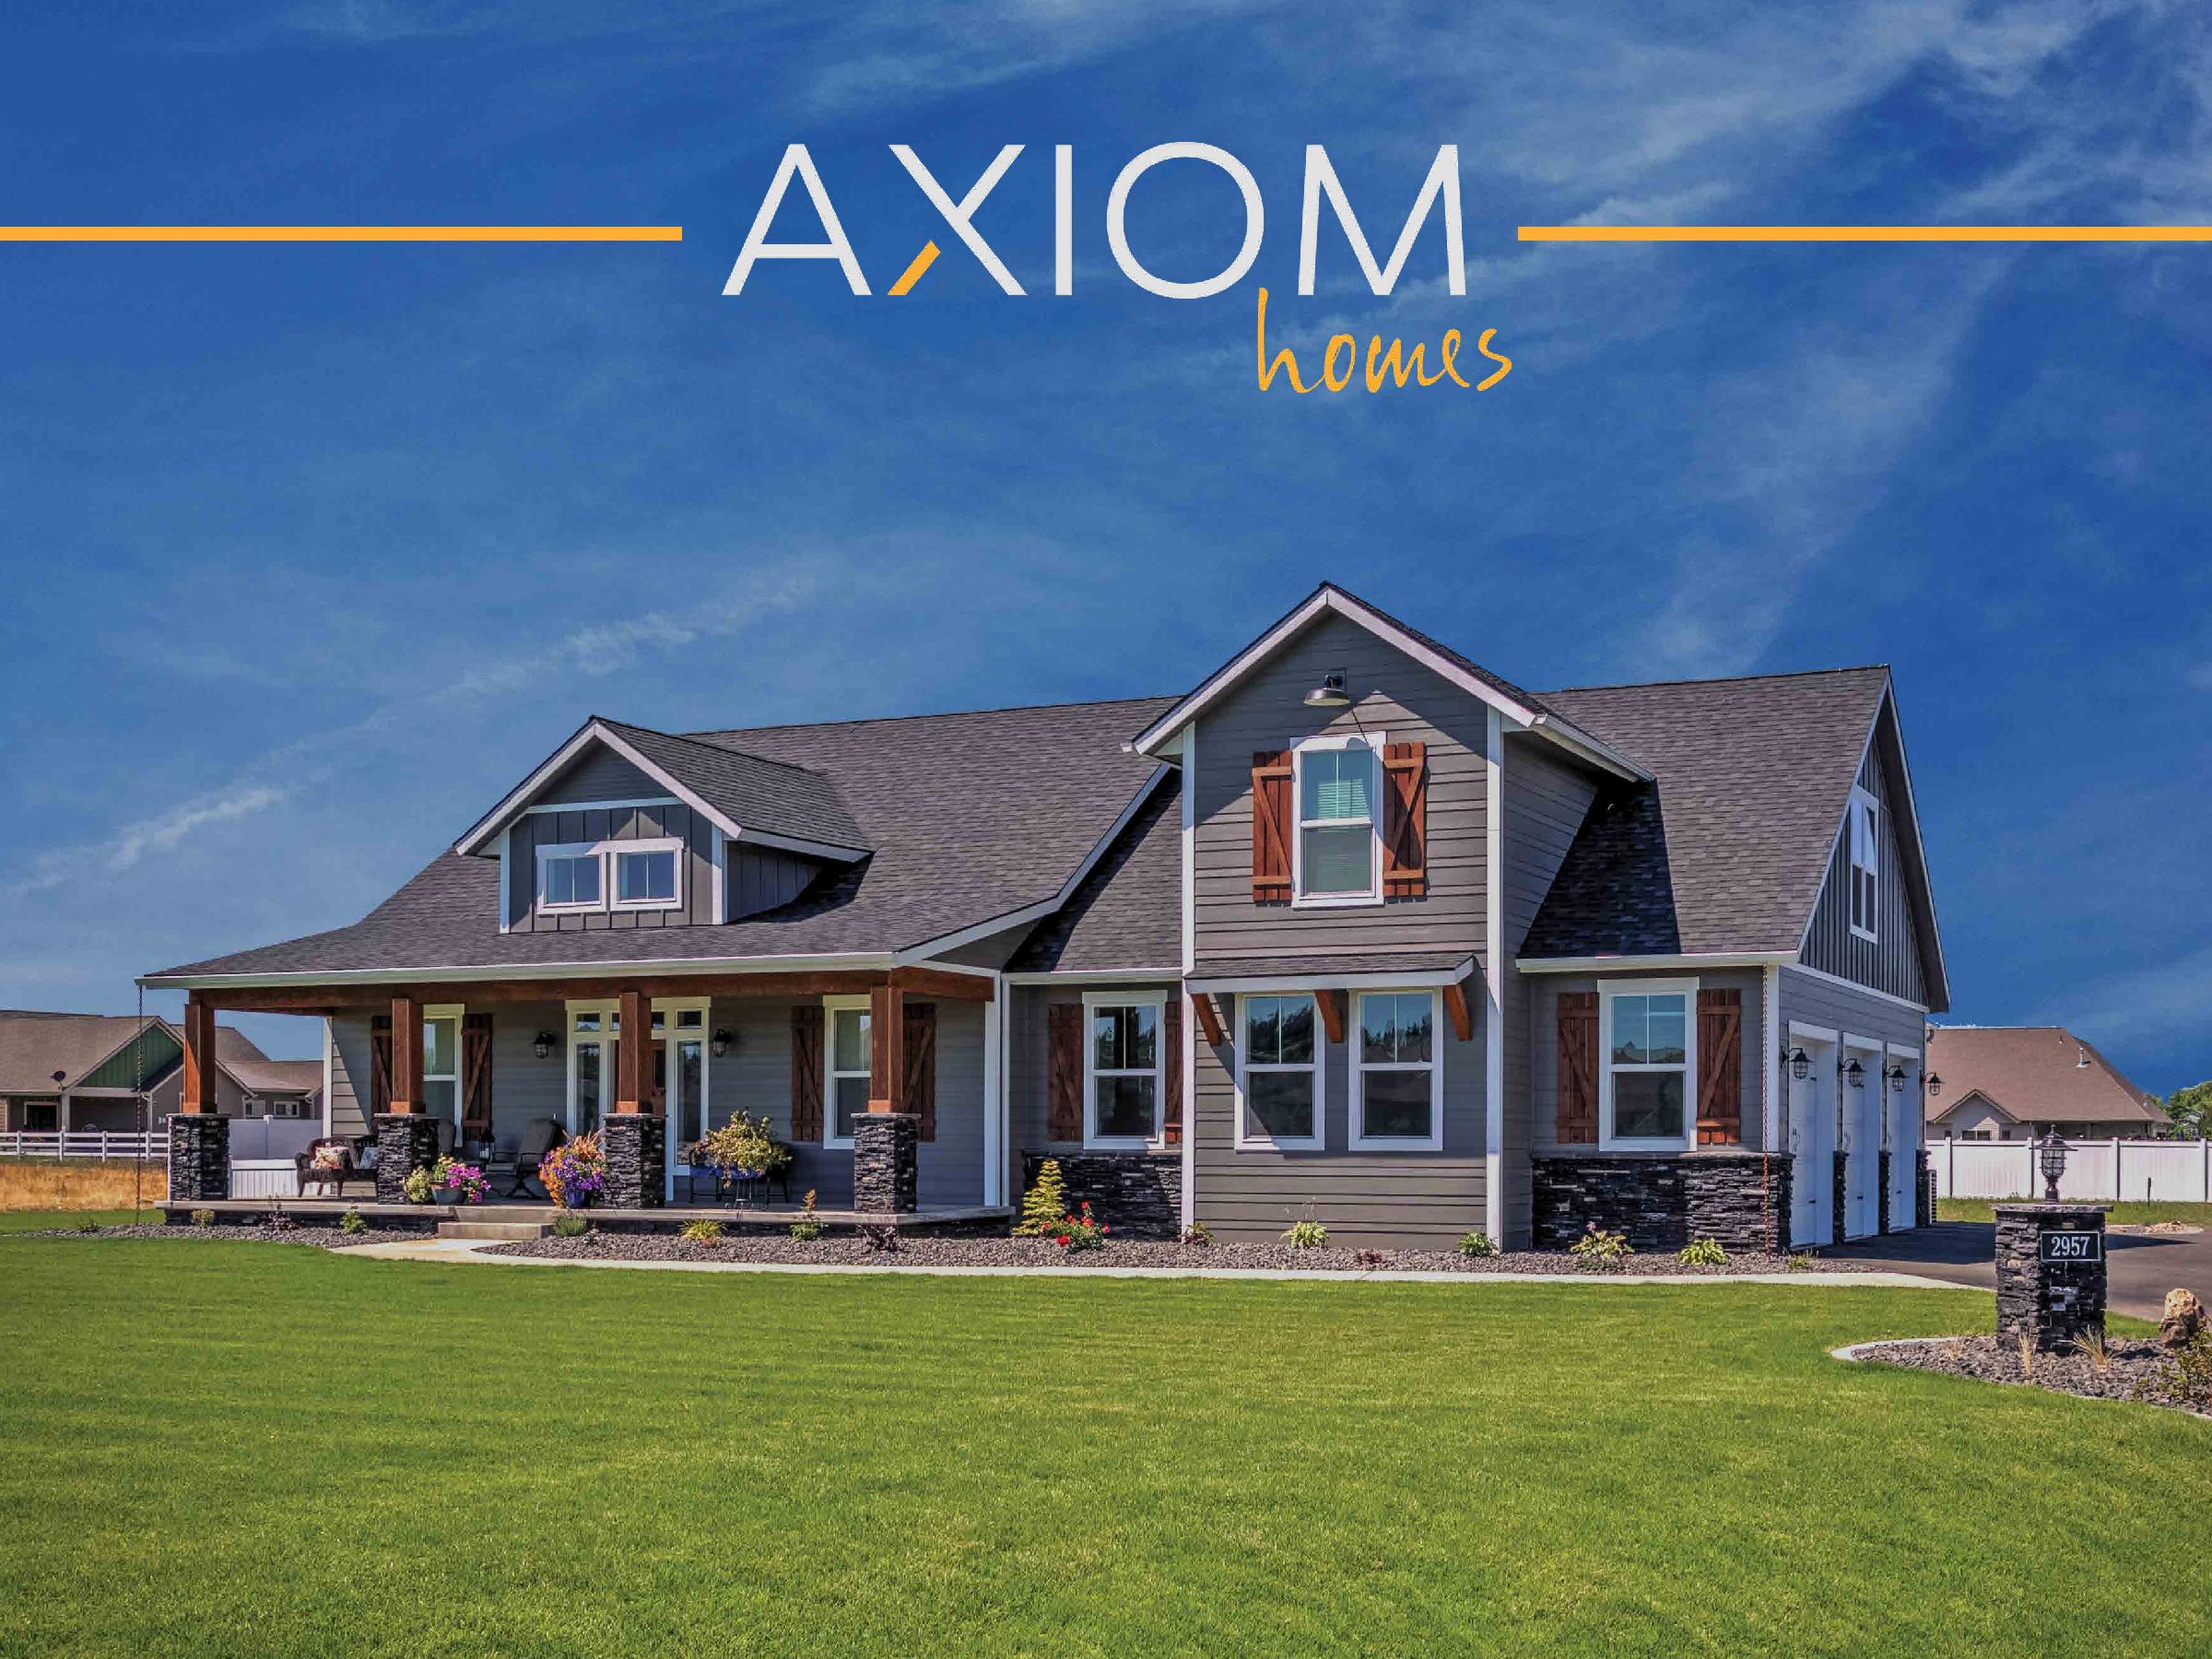 axiom-homes_digital-interactive_id_6.11.18_1.jpg